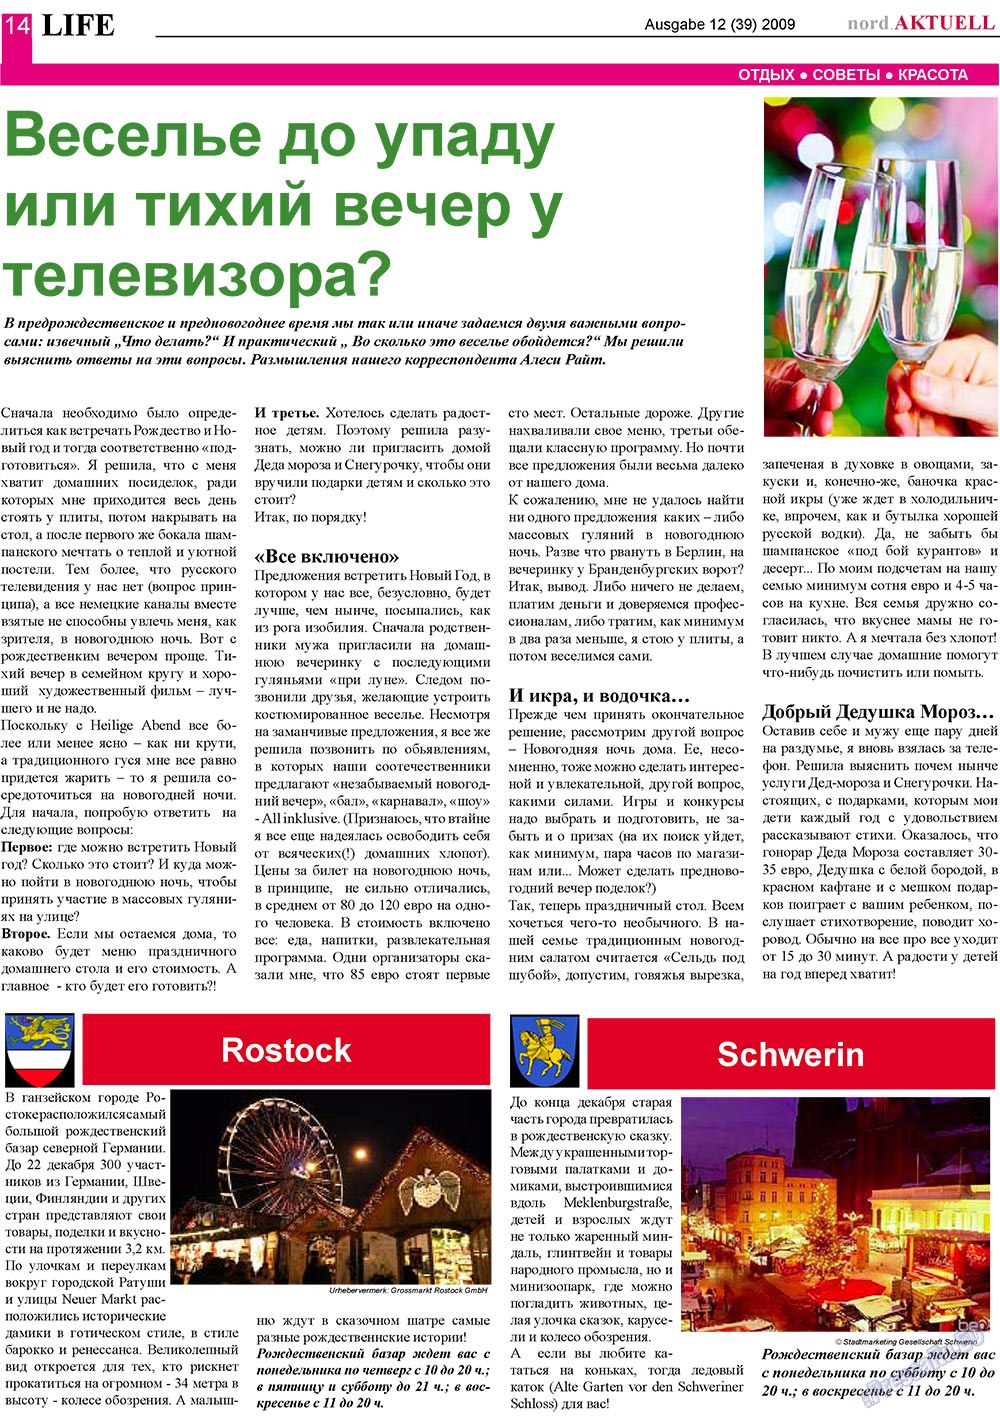 nord.Aktuell, газета. 2009 №12 стр.14